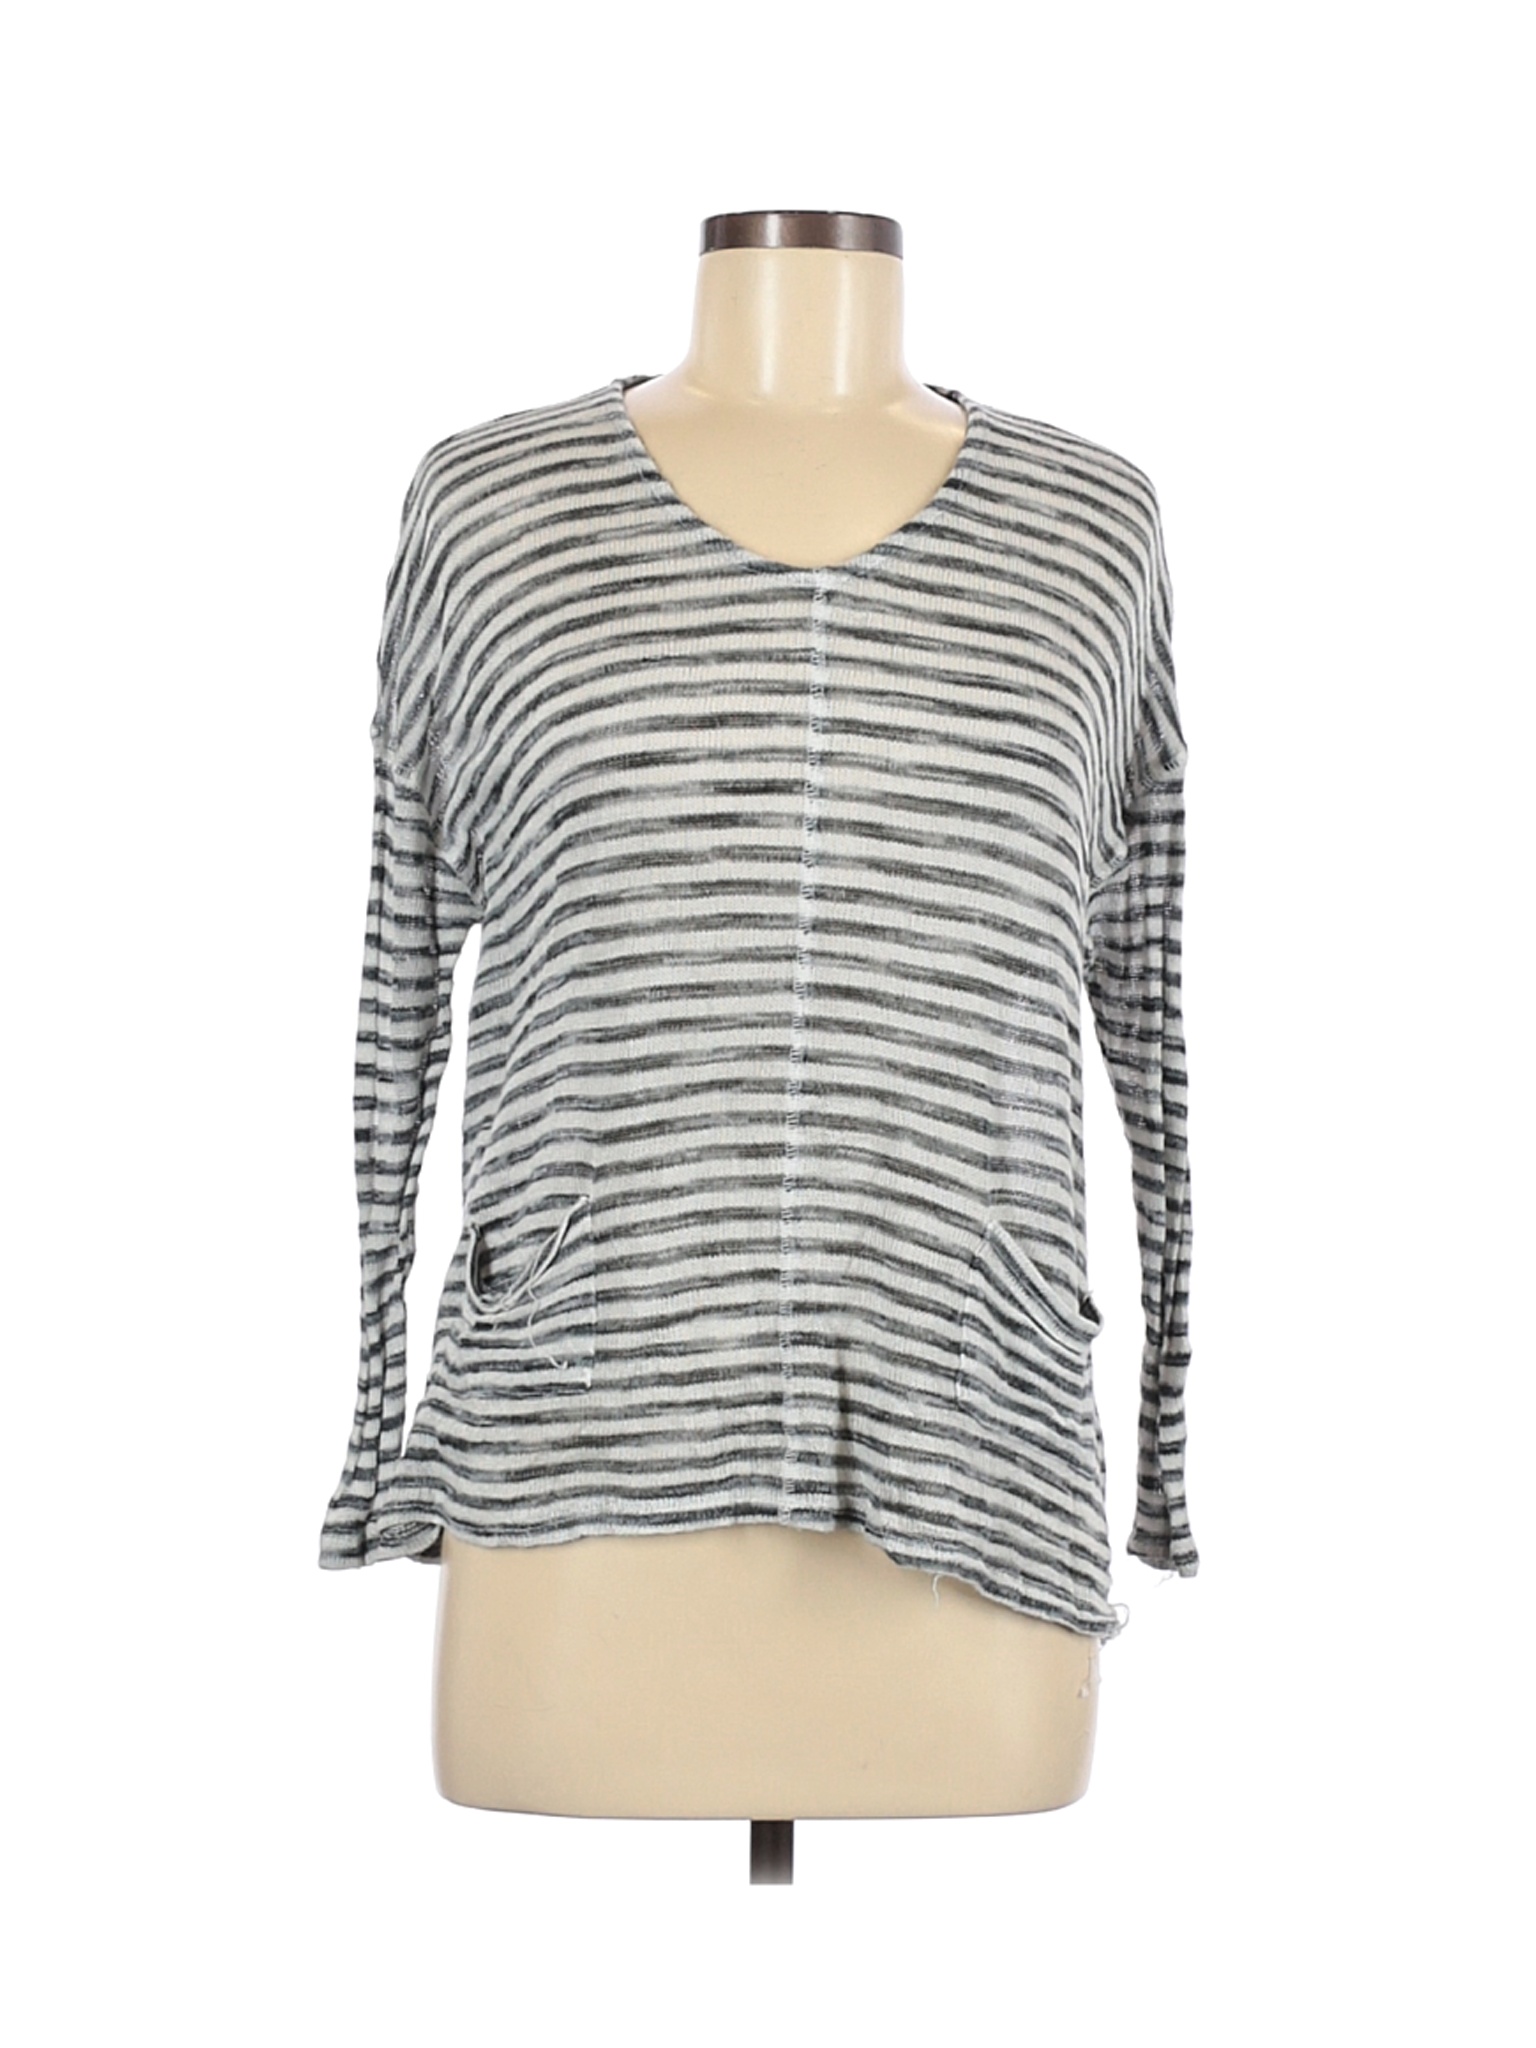 Xhilaration Women Gray Long Sleeve Top M | eBay